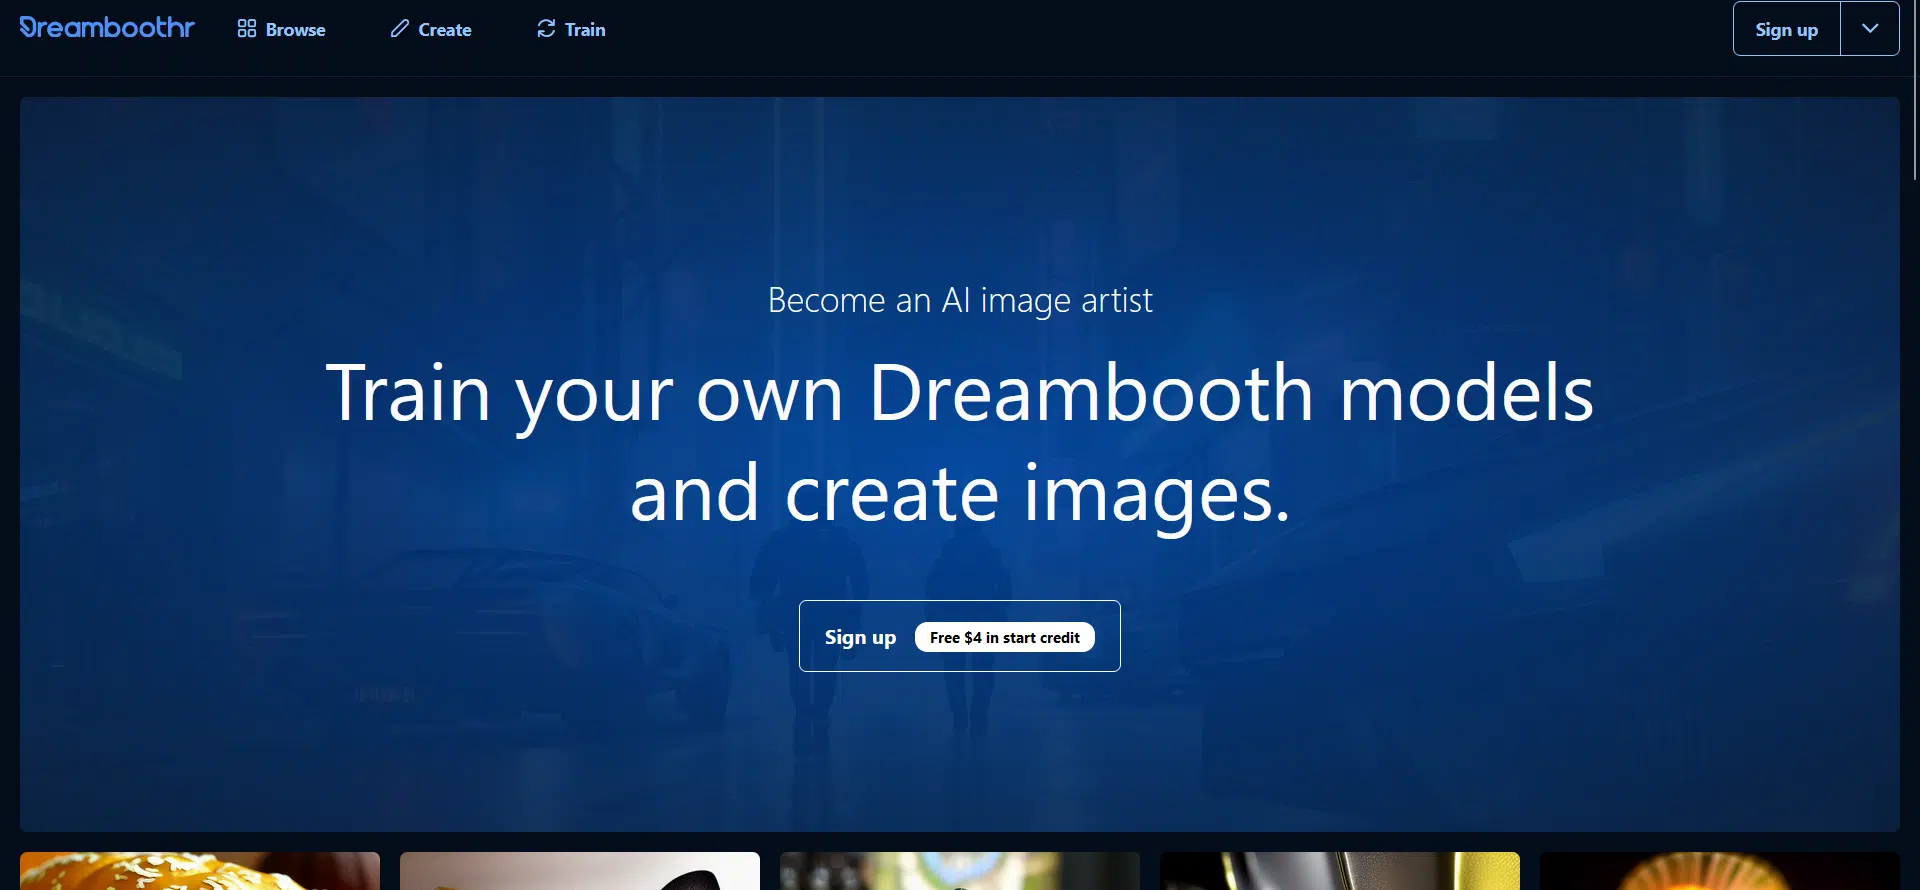 Dreamboothwebsite picture